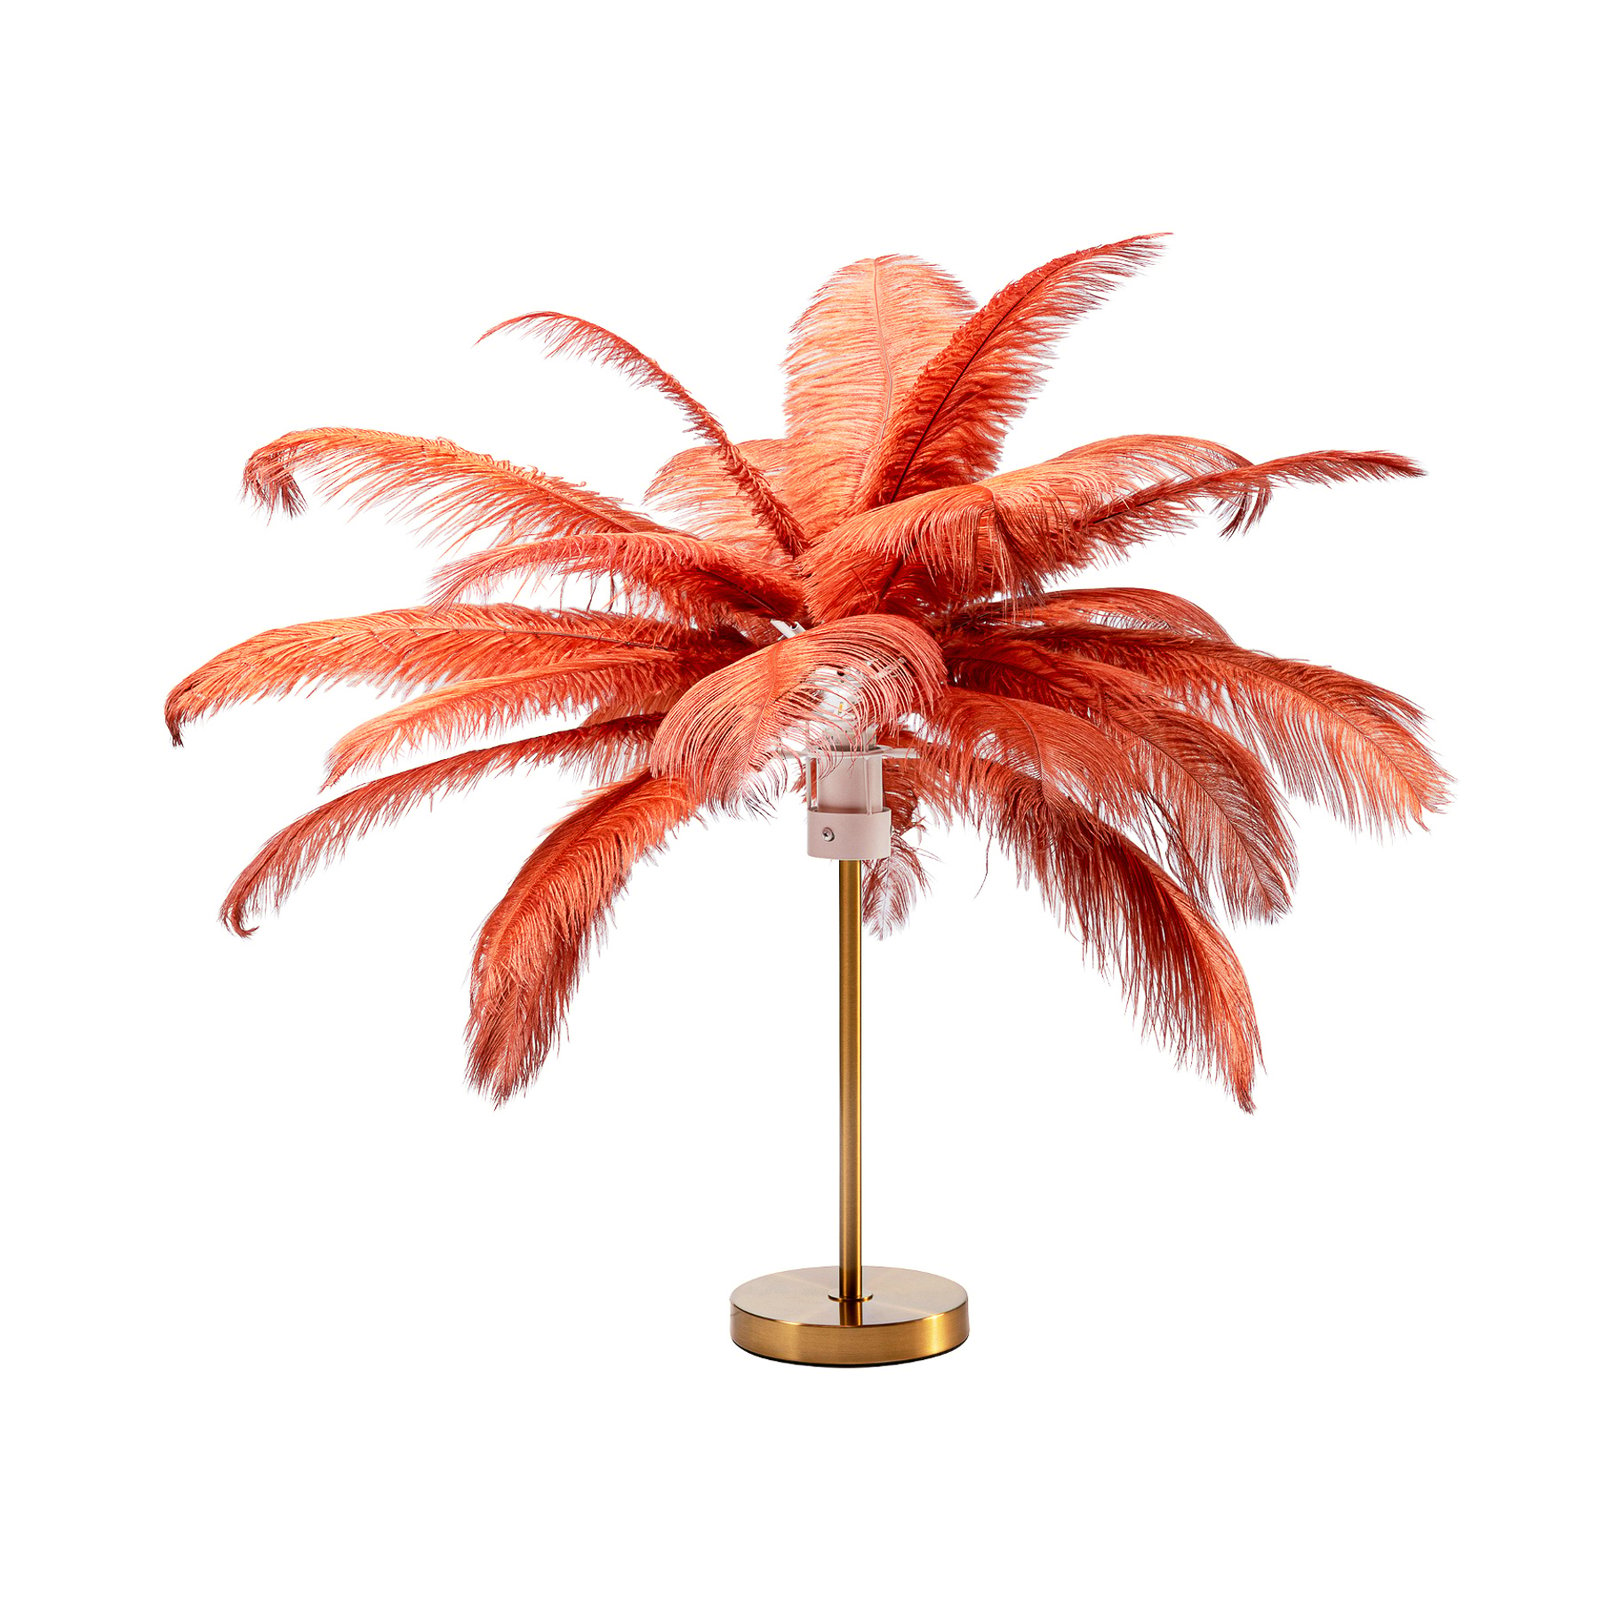 KARE Feather Palm stolna lampa s perjem, rđasto crvena